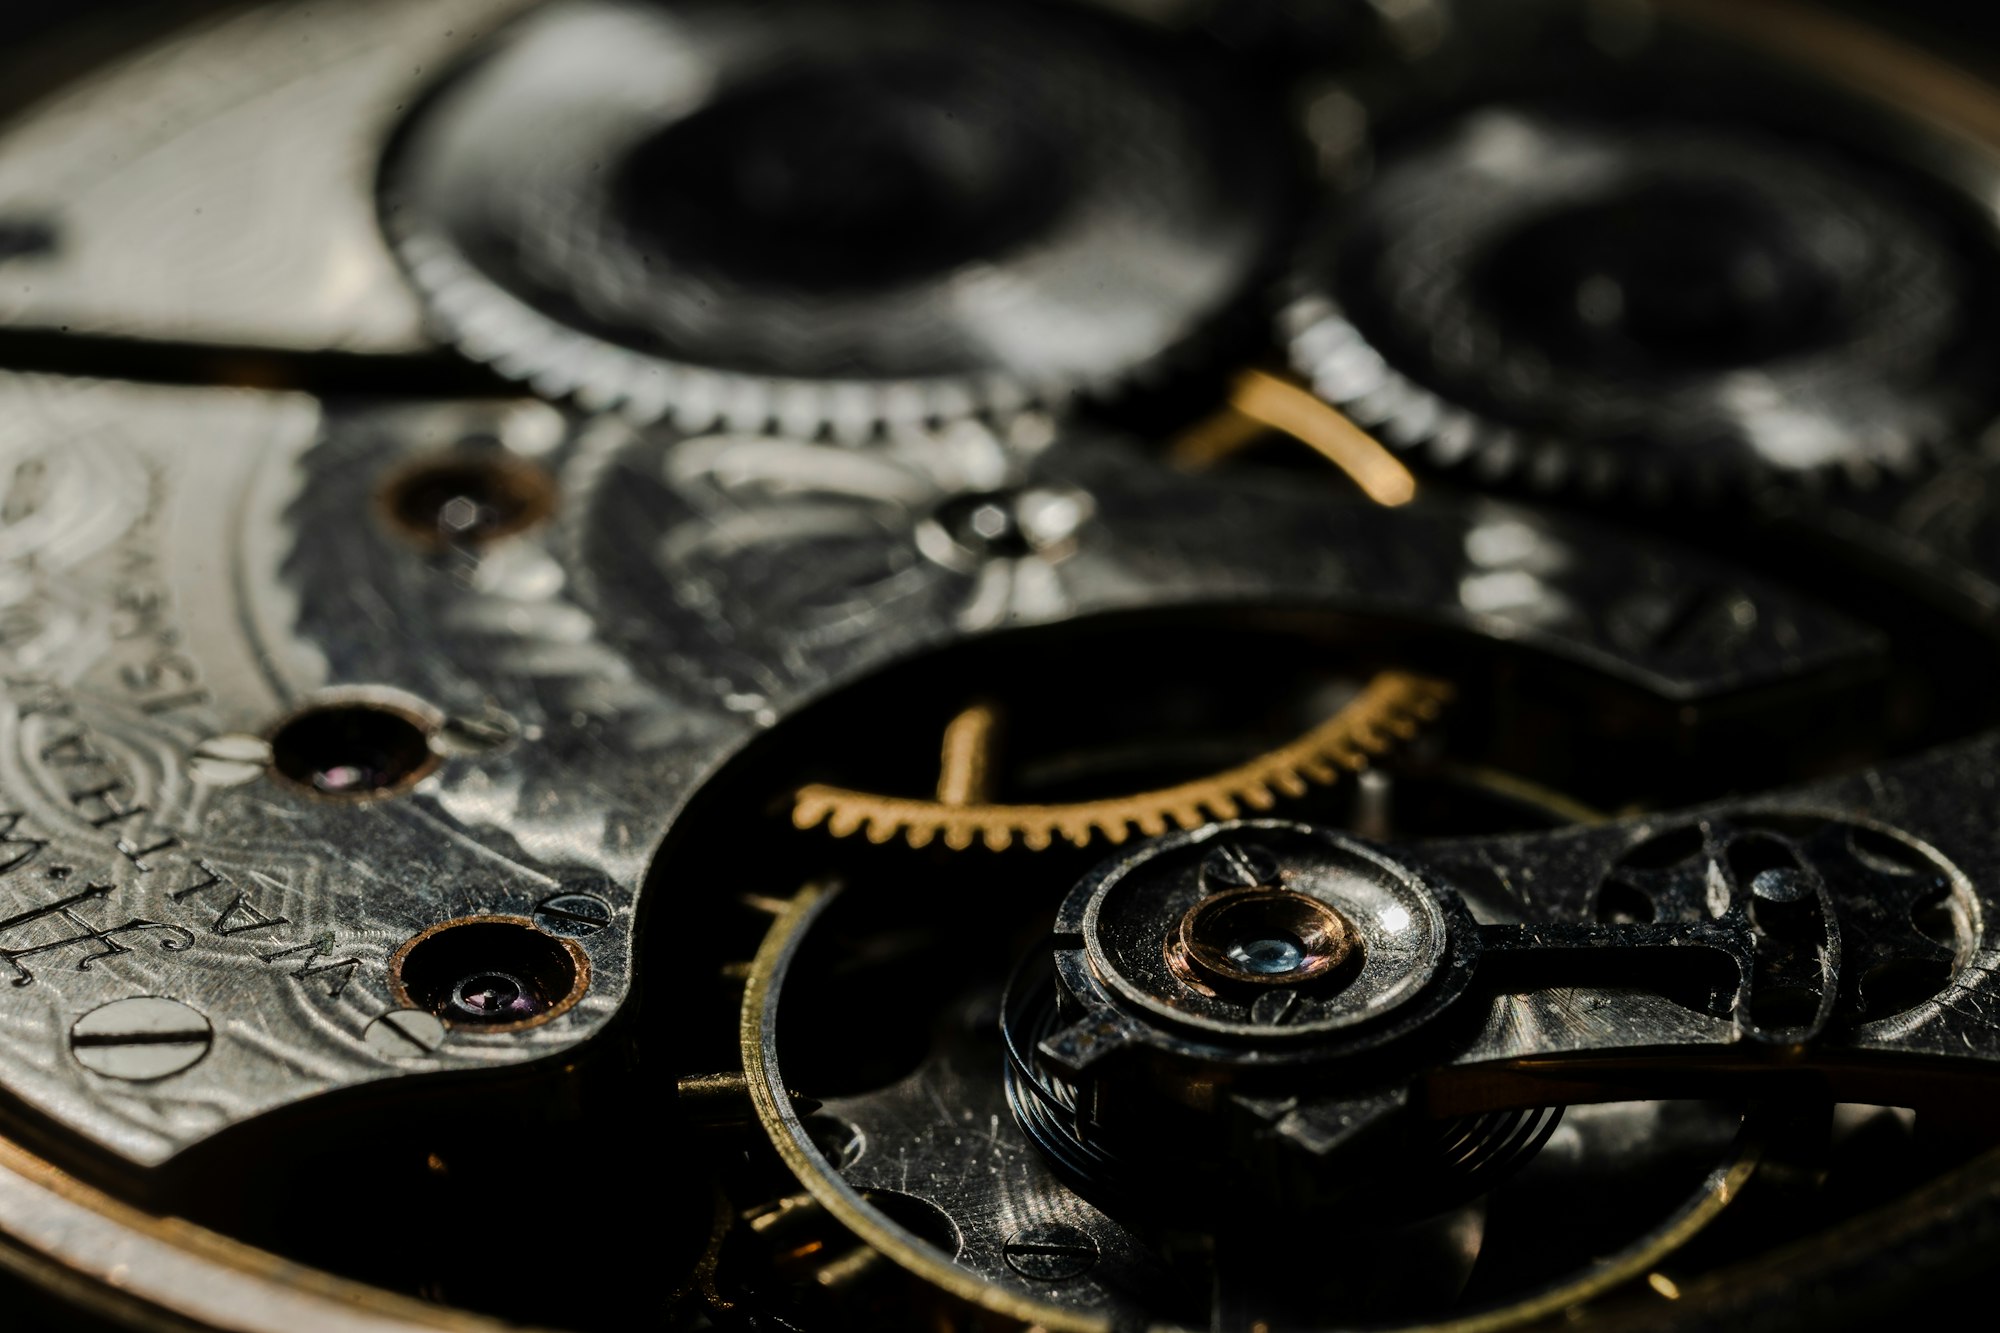 inside gears of an antique pocket watch